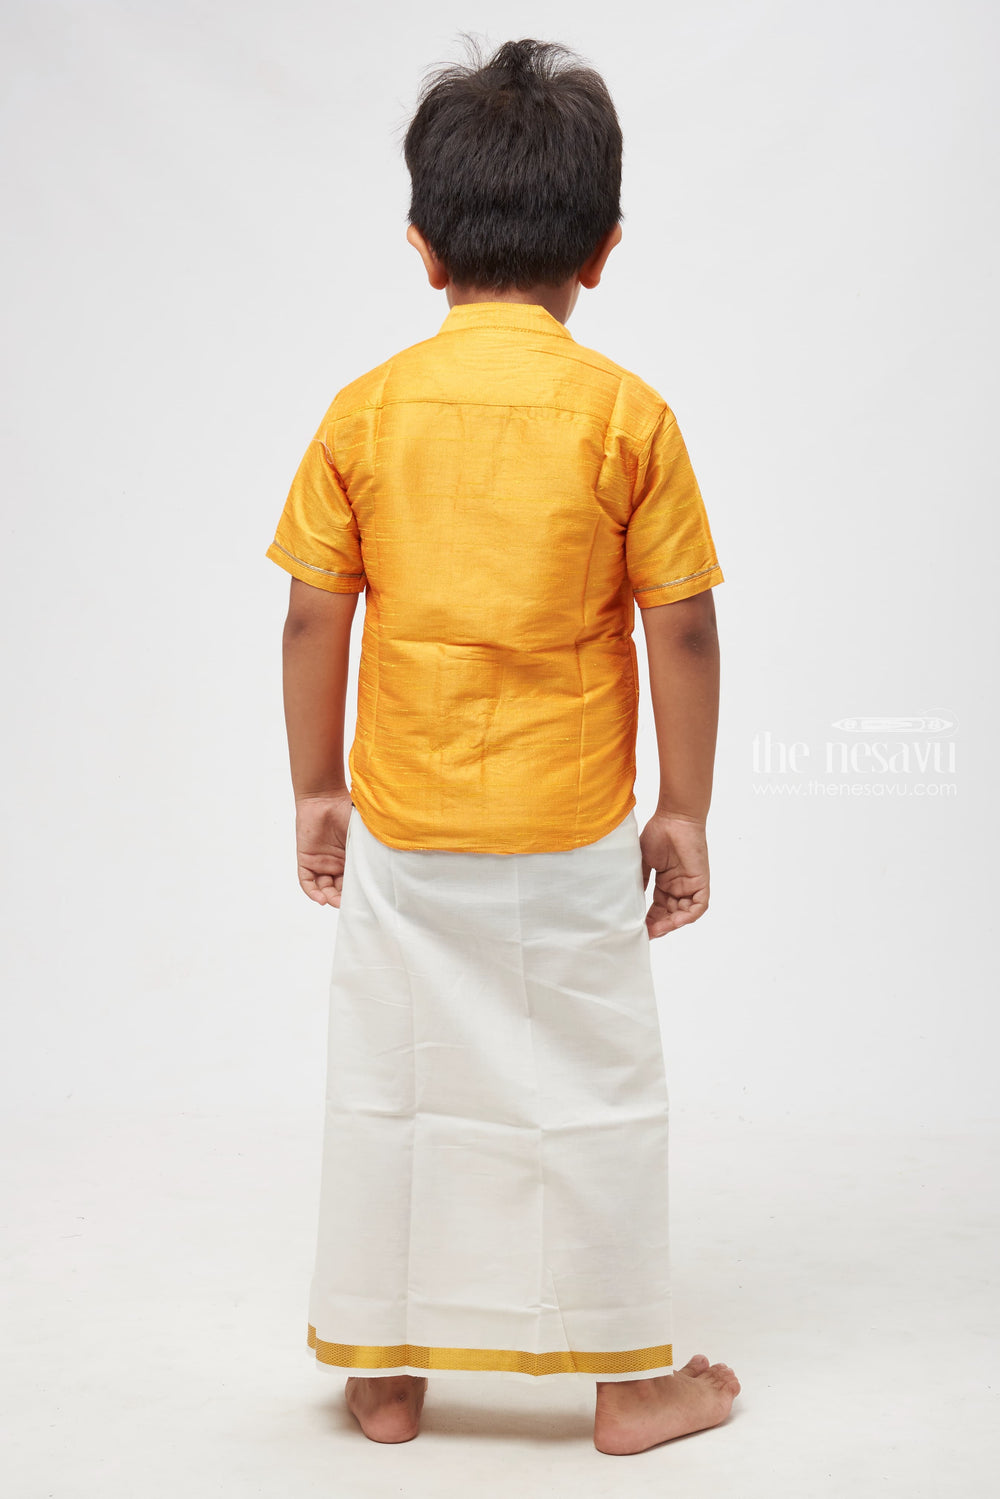 The Nesavu Boys Silk Shirt Boys' Premium Orange Silk Shirt - Traditional Festive Wear with Embellished Honey Bee Nesavu Boys Orange Silk Shirt with Honey Bee | Traditional Festive Attire | Nesavu Signature Line